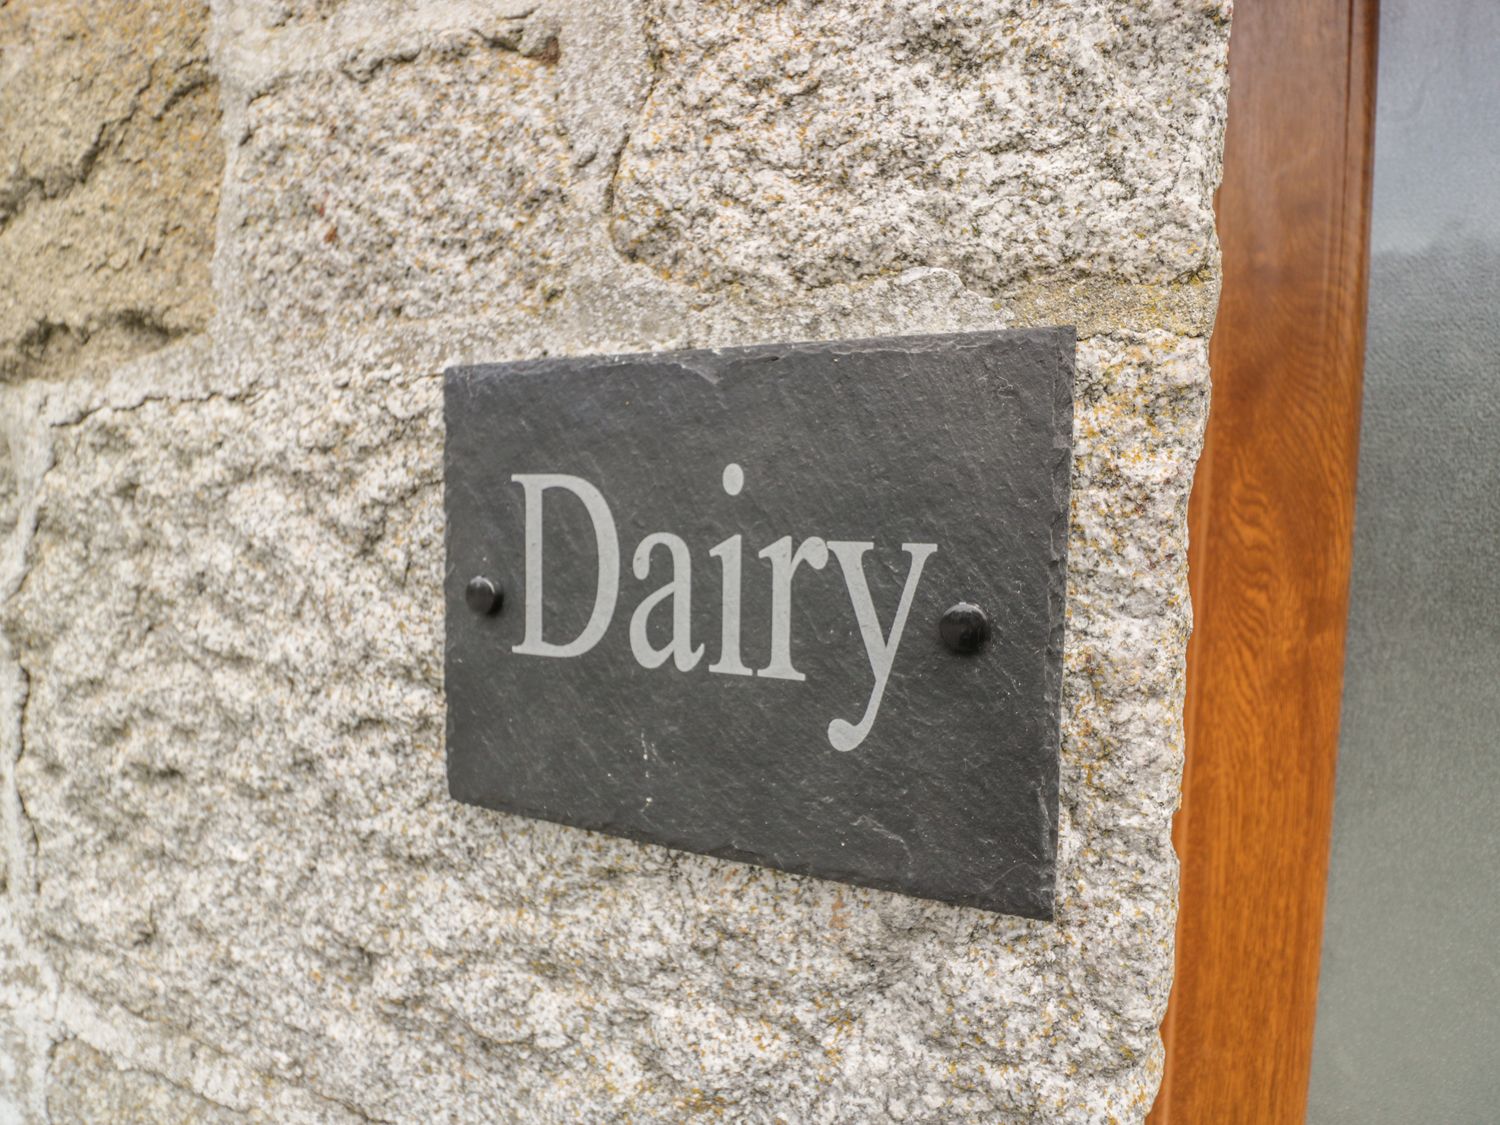 The Dairy, Scotland